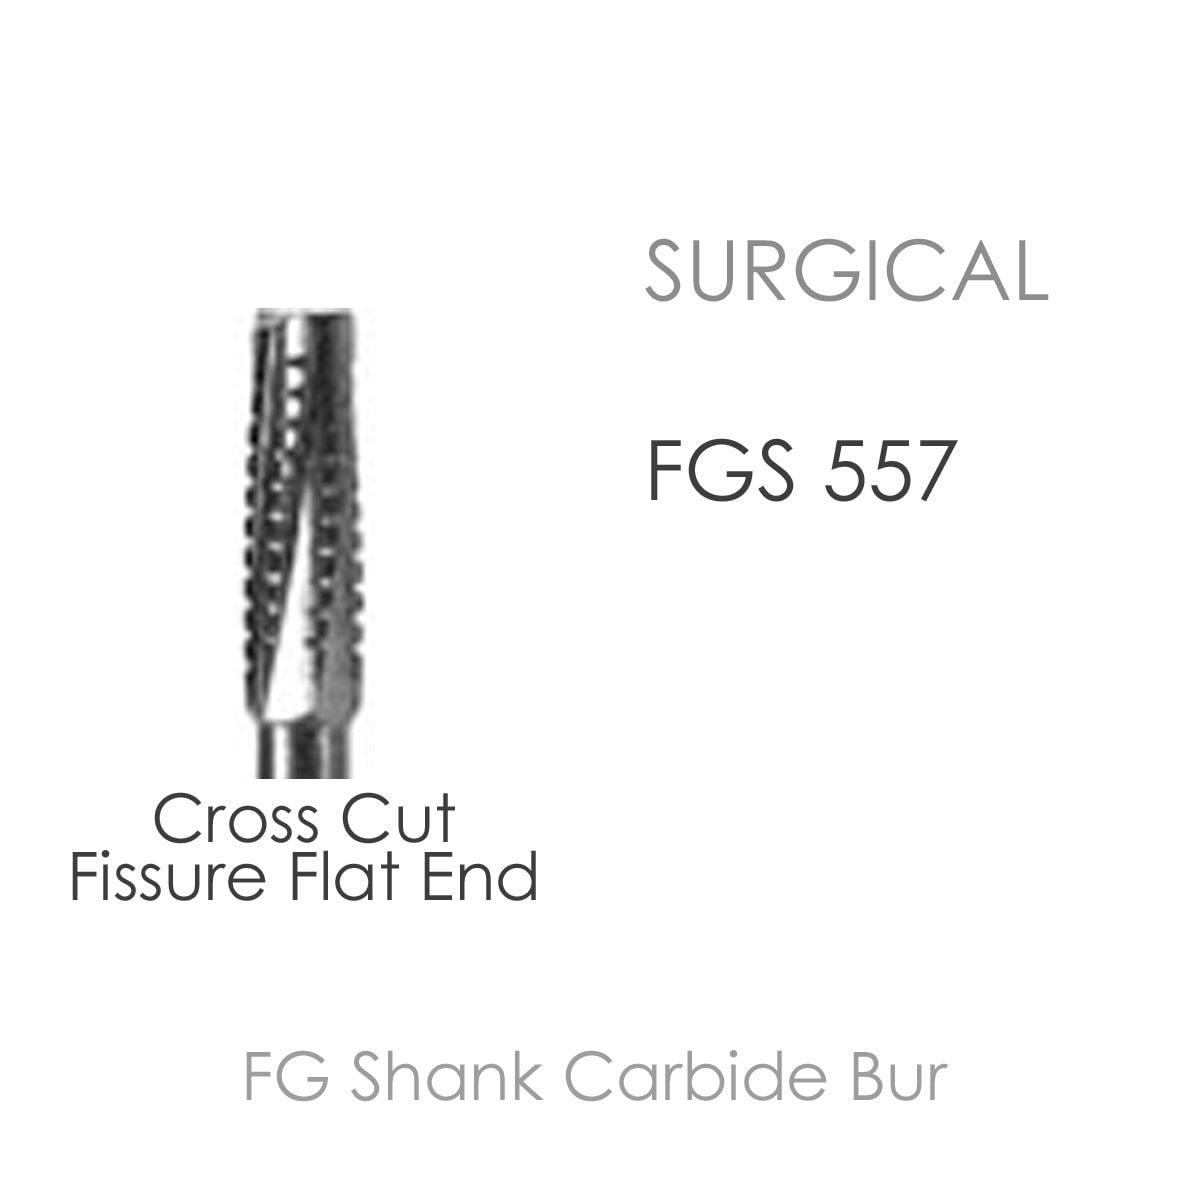 FG Surgical Carbide Bur FGS 557, Cross Cut Fissure Flat End,  10/pack.